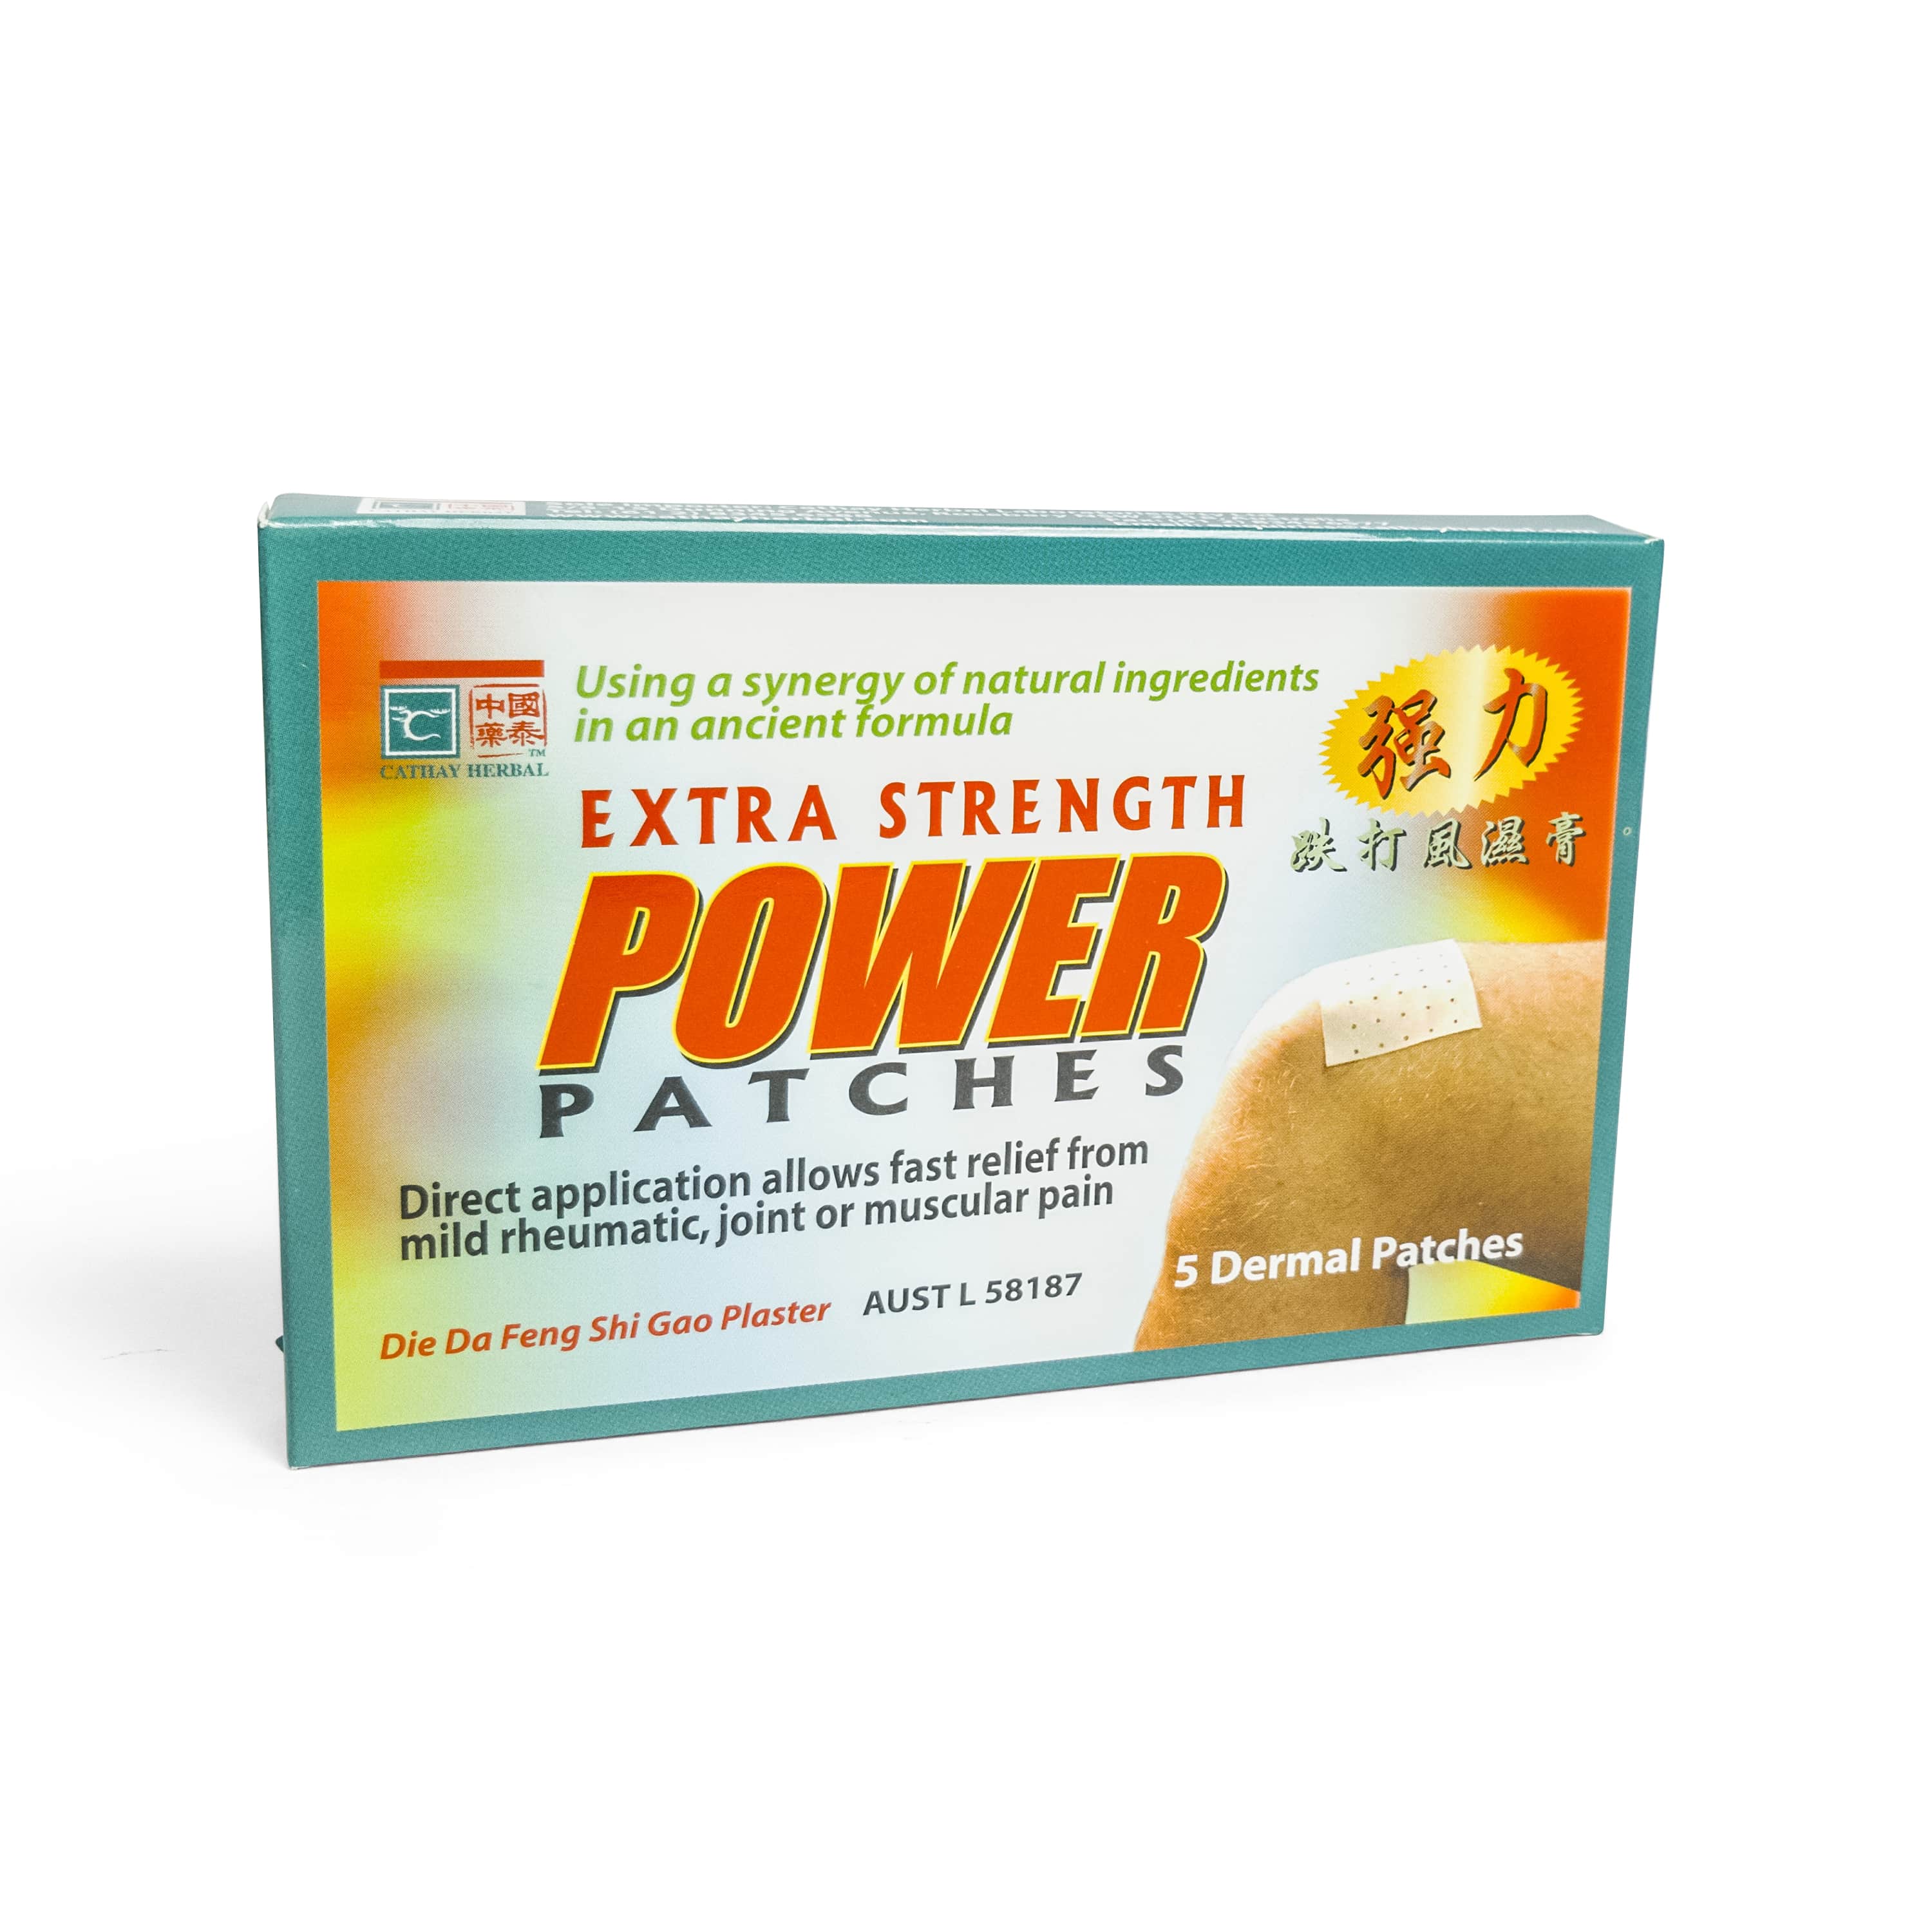 Extra Strength Power Patches (Die Da Feng Shi Gao Plaster)